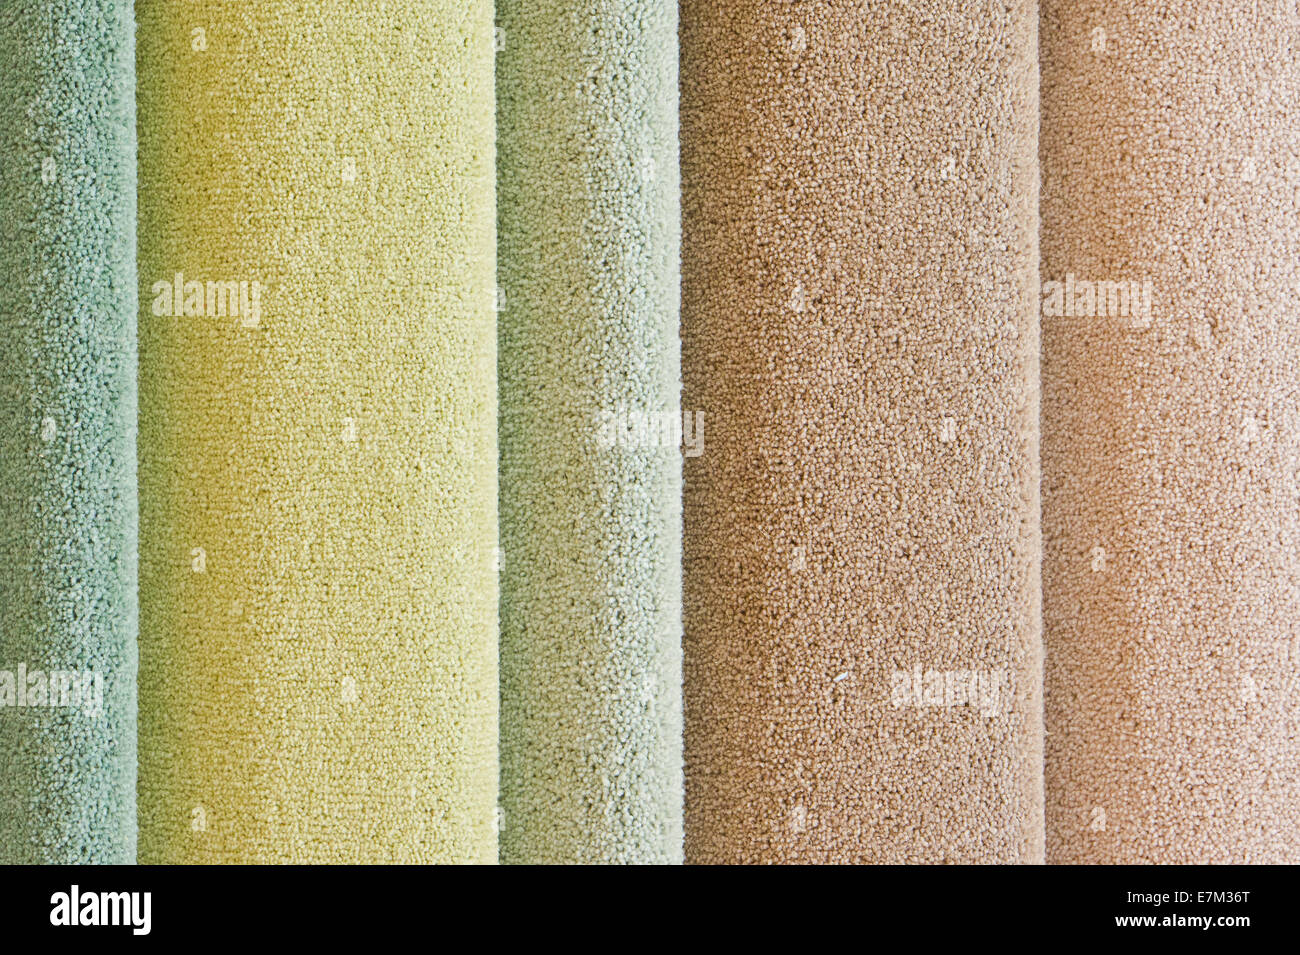 Colores de moqueta sintética como imagen de fondo Fotografía de stock -  Alamy